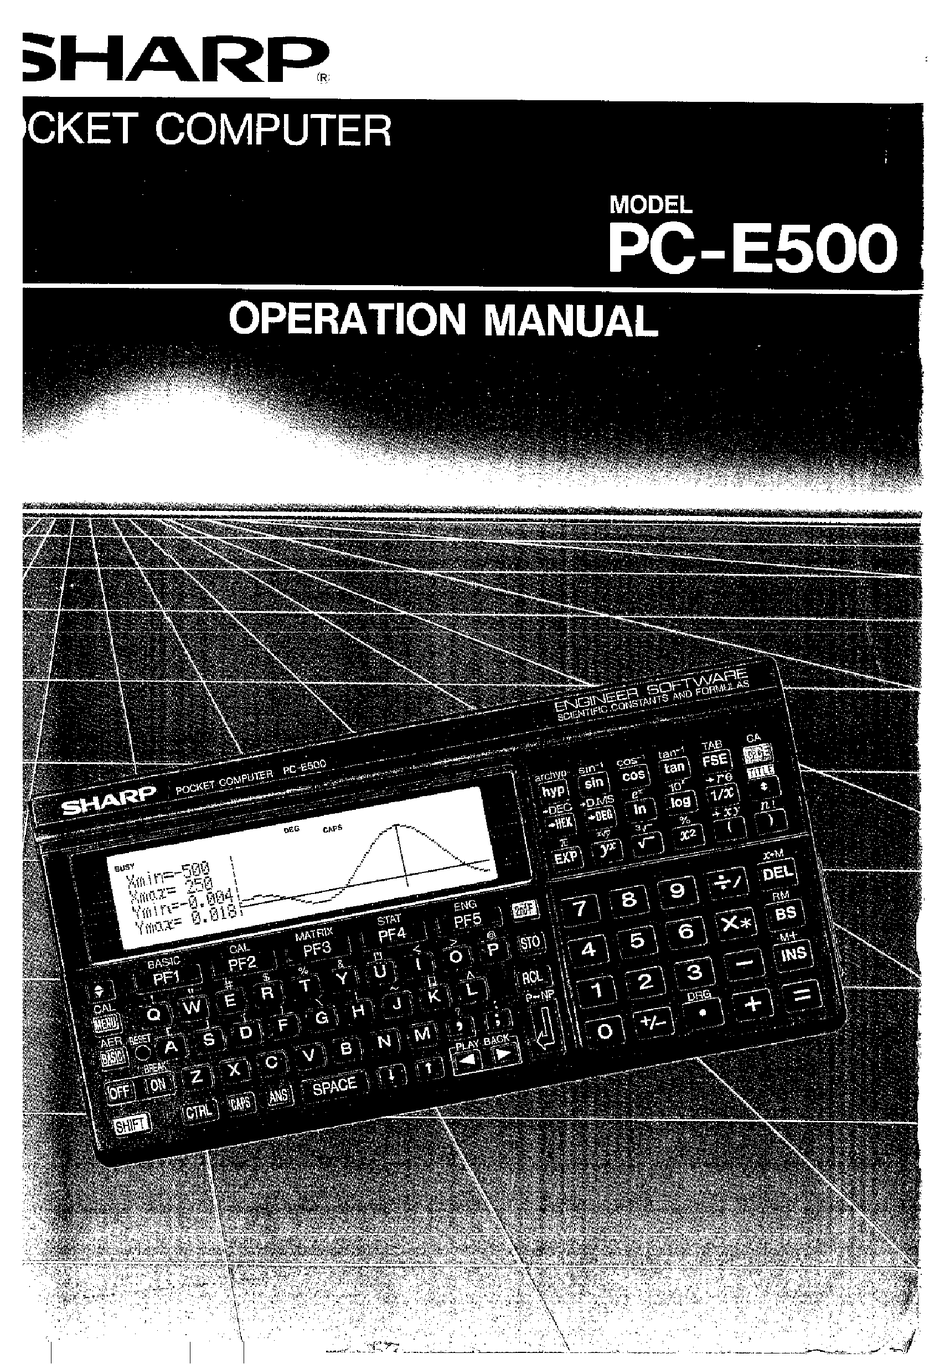 SHARP PC E OPERATION MANUAL Pdf Download   ManualsLib